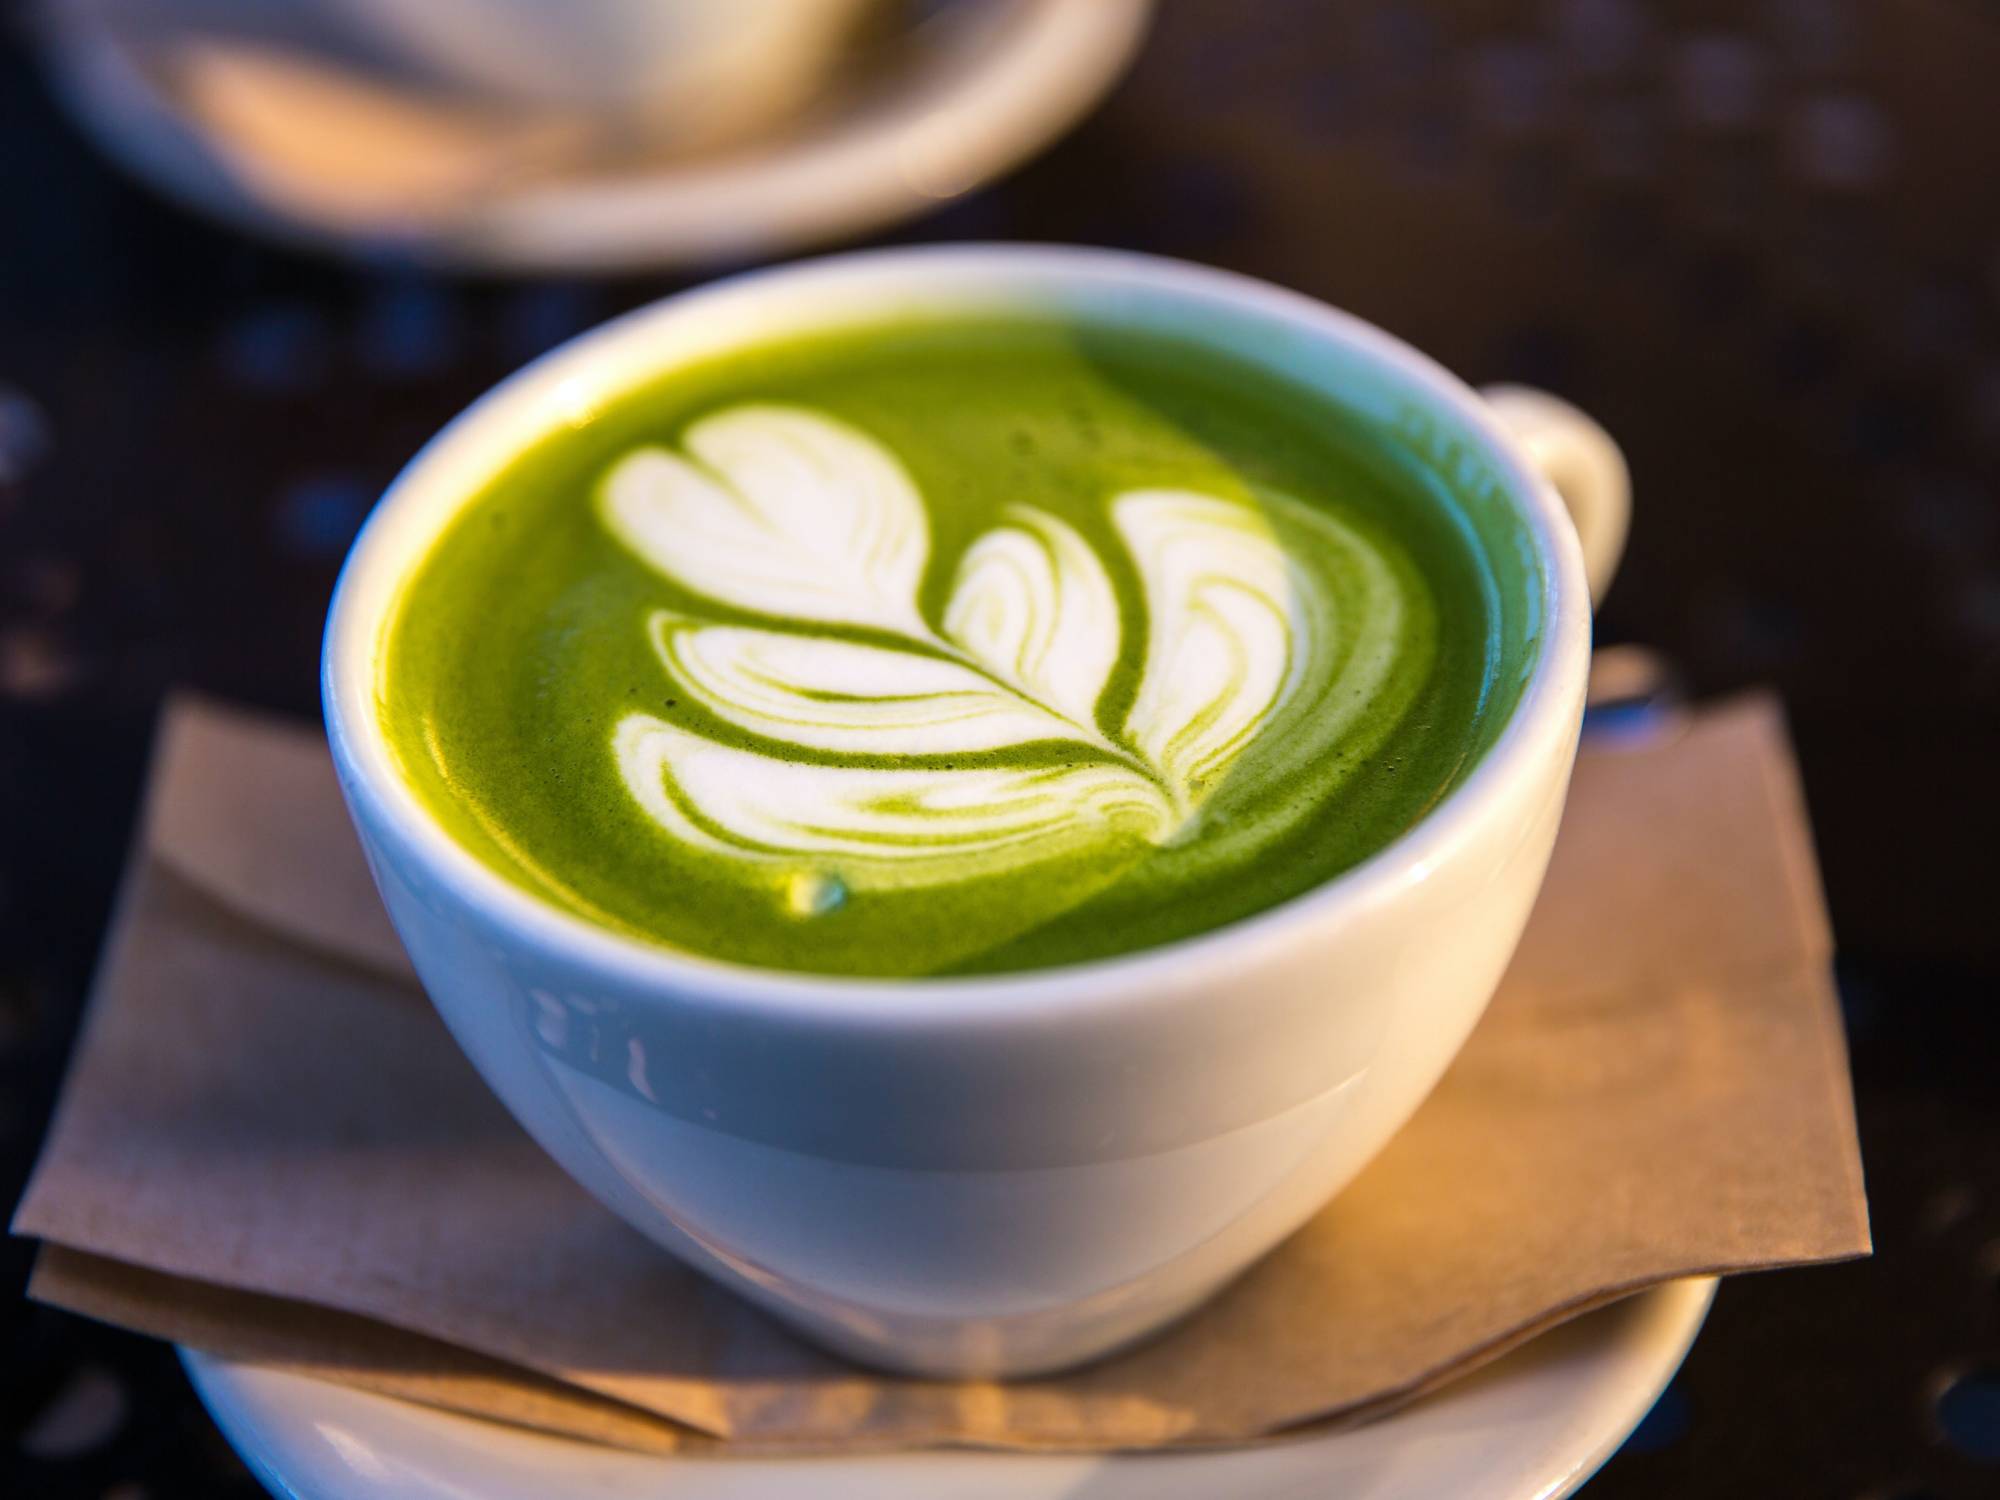 https://www.popsci.com/uploads/2021/10/15/close-up-photo-of-a-matcha-latte-cup.jpg?auto=webp